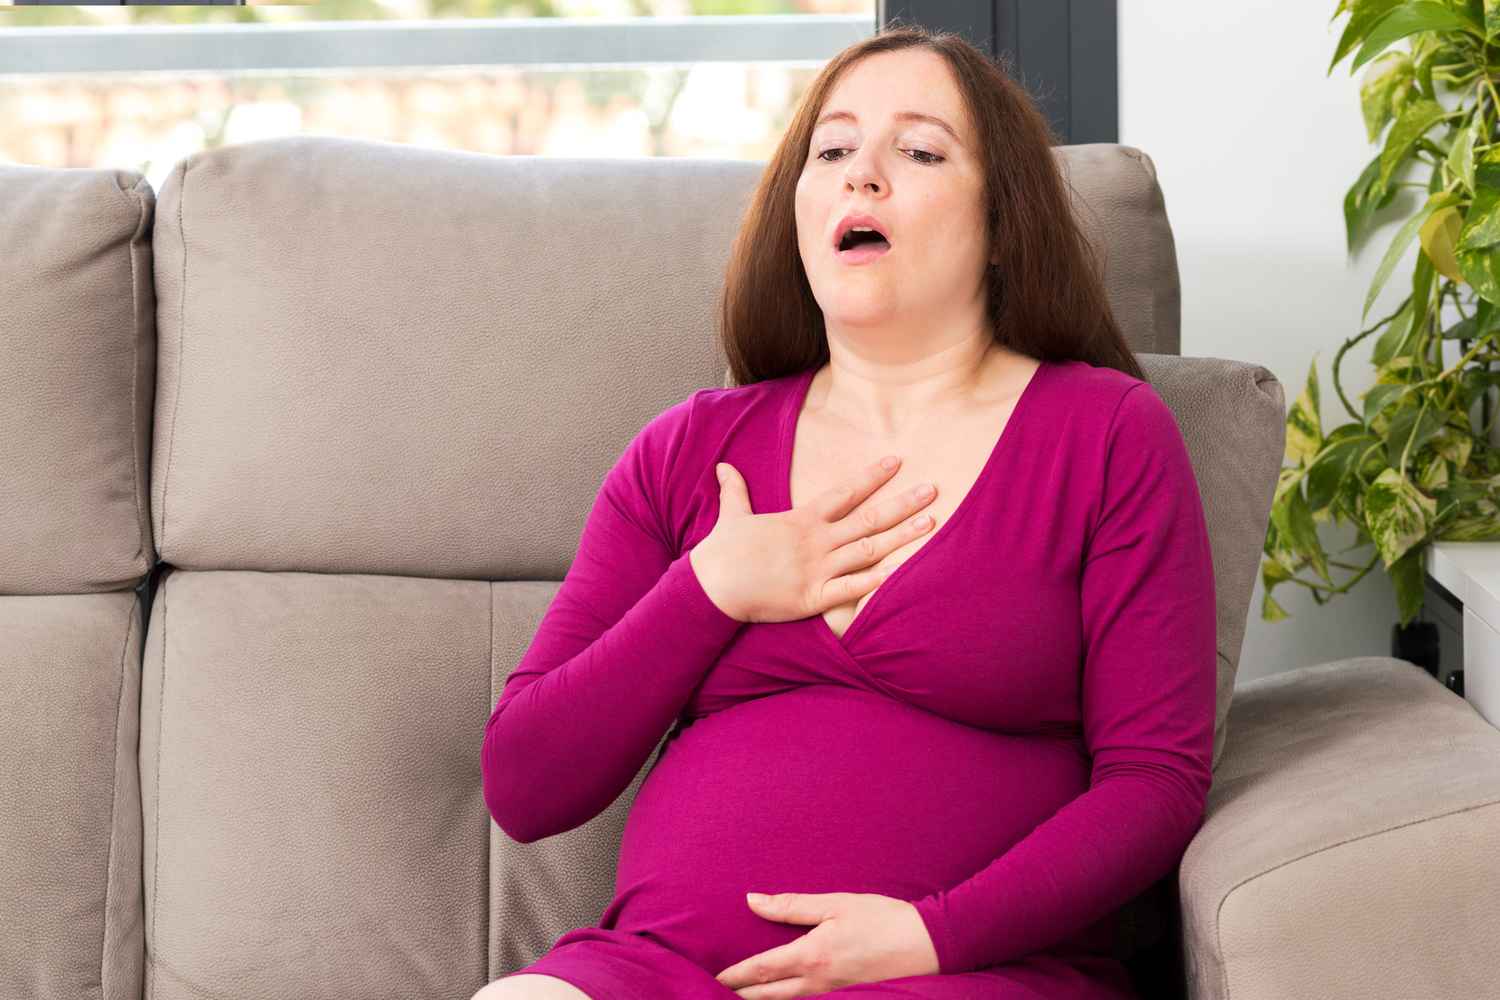 Risks of Bronchitis During Pregnancy